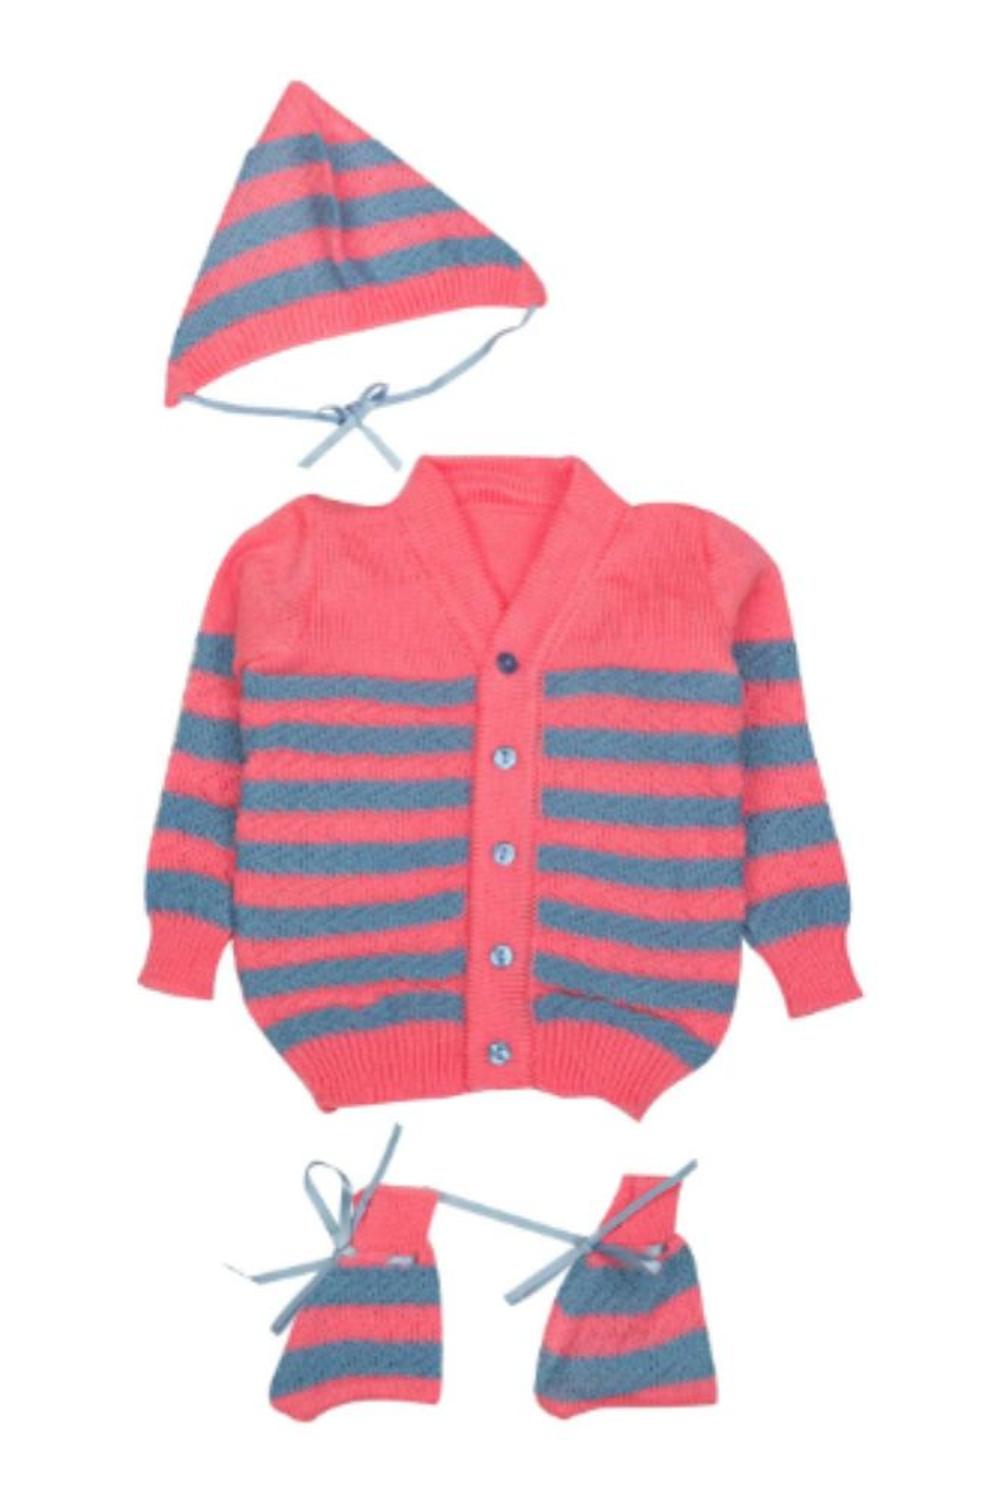 Mee Mee Baby Sweater Sets (Neon Pink, Blue)